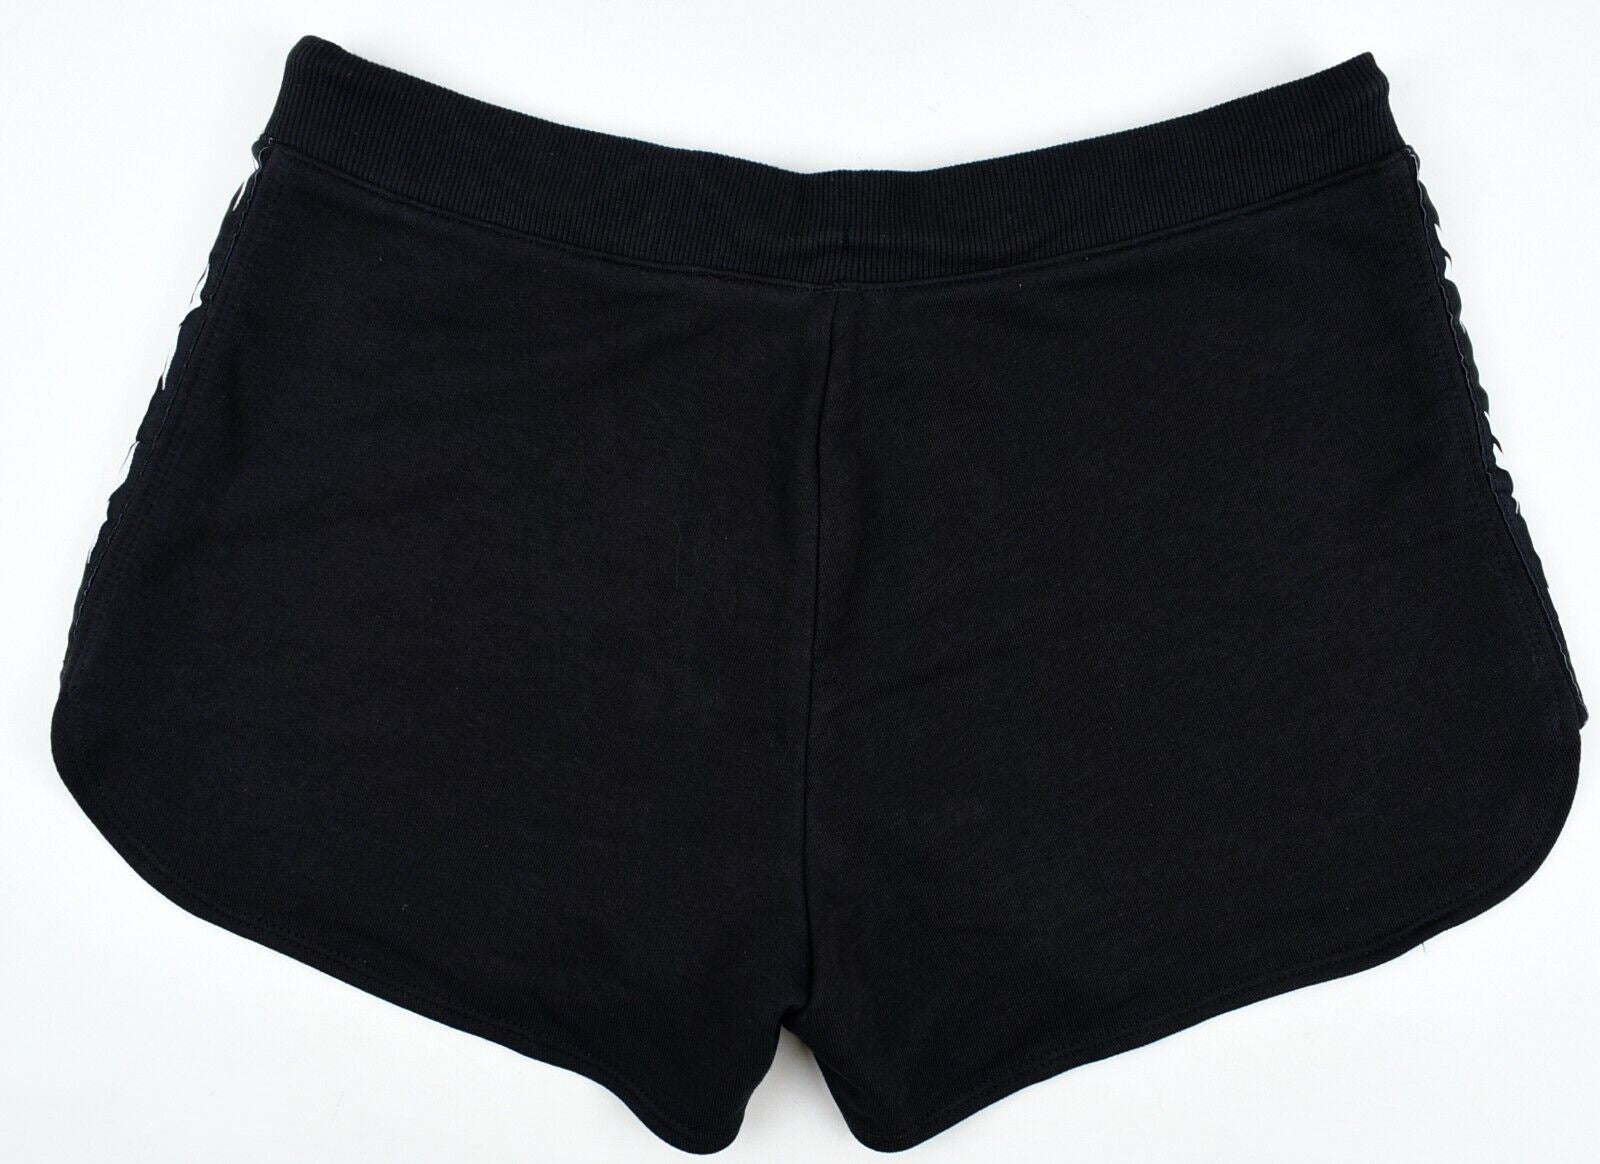 REEBOK Women's Sweat Shorts, with Side Tape, Black, size M /UK 12-14